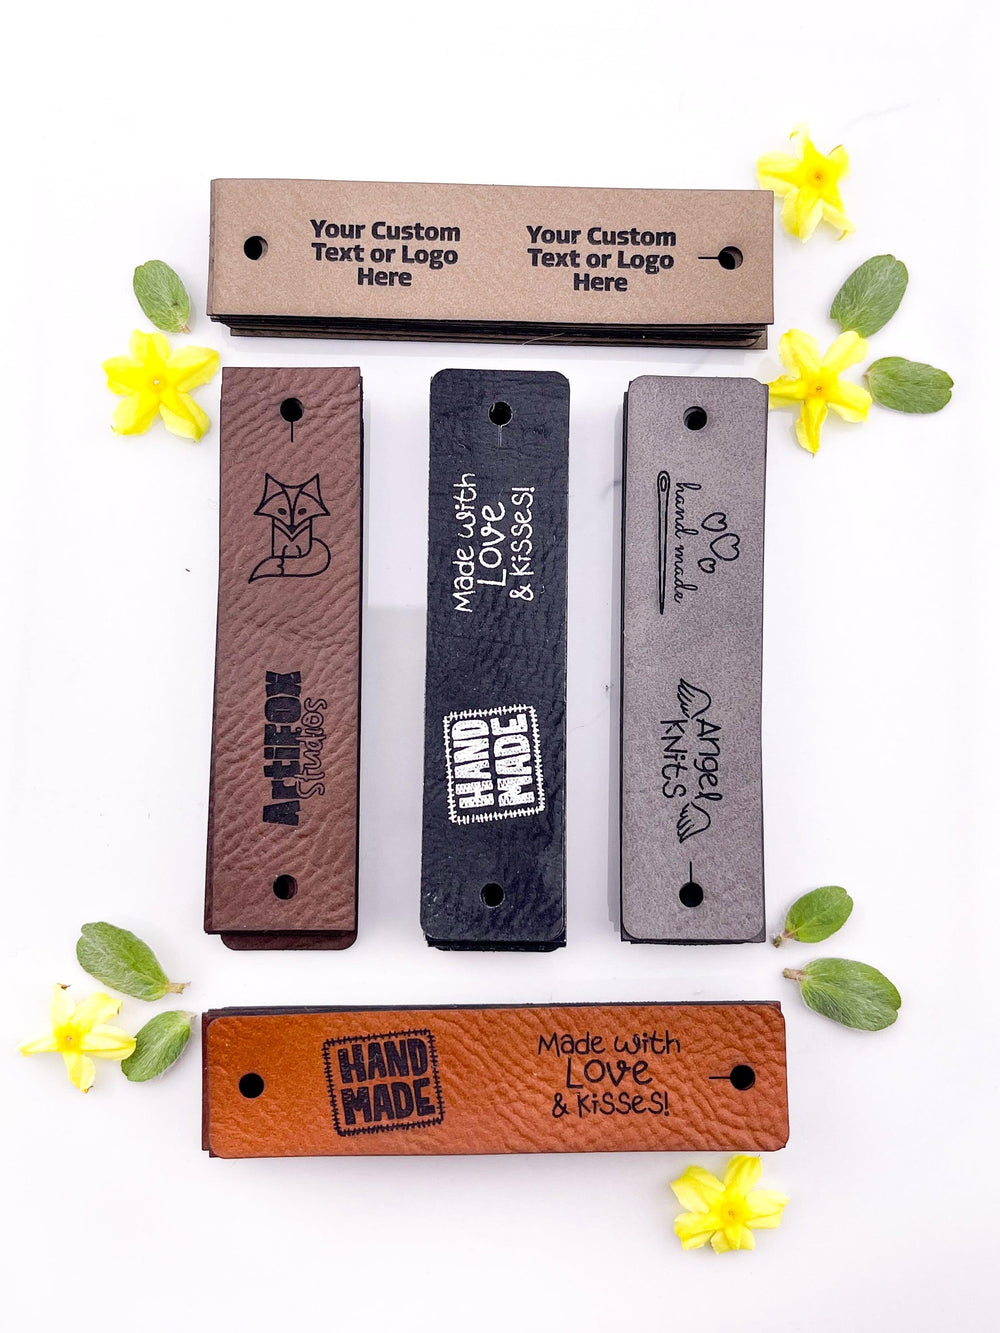  UKCOCO 400 Pcs Handmade Label Faux Leather Tags